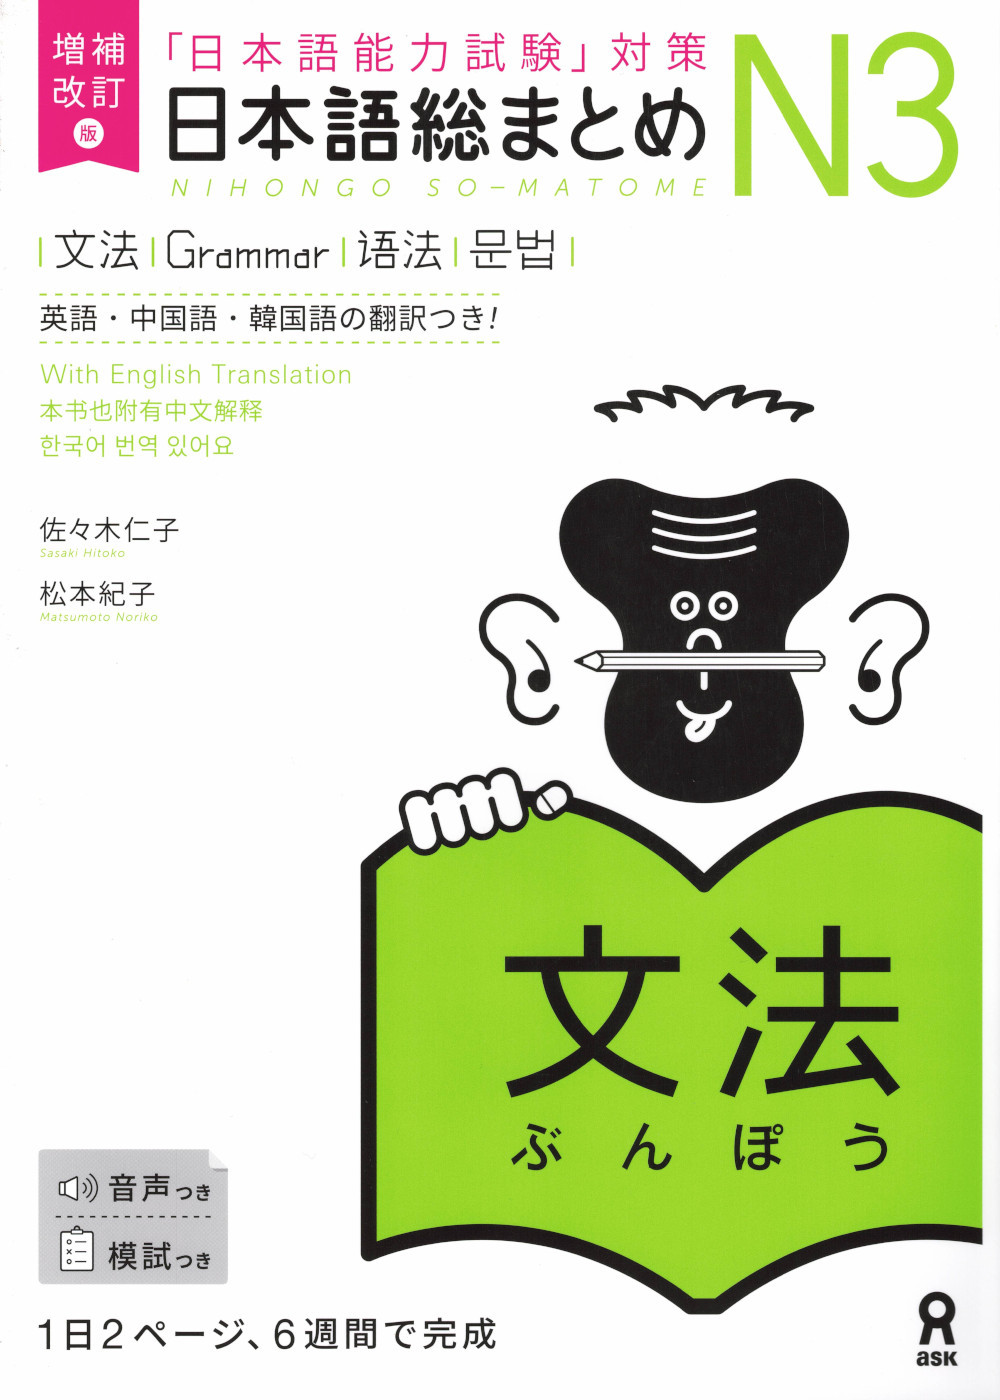 Nihongo So-Matome N3 Grammar